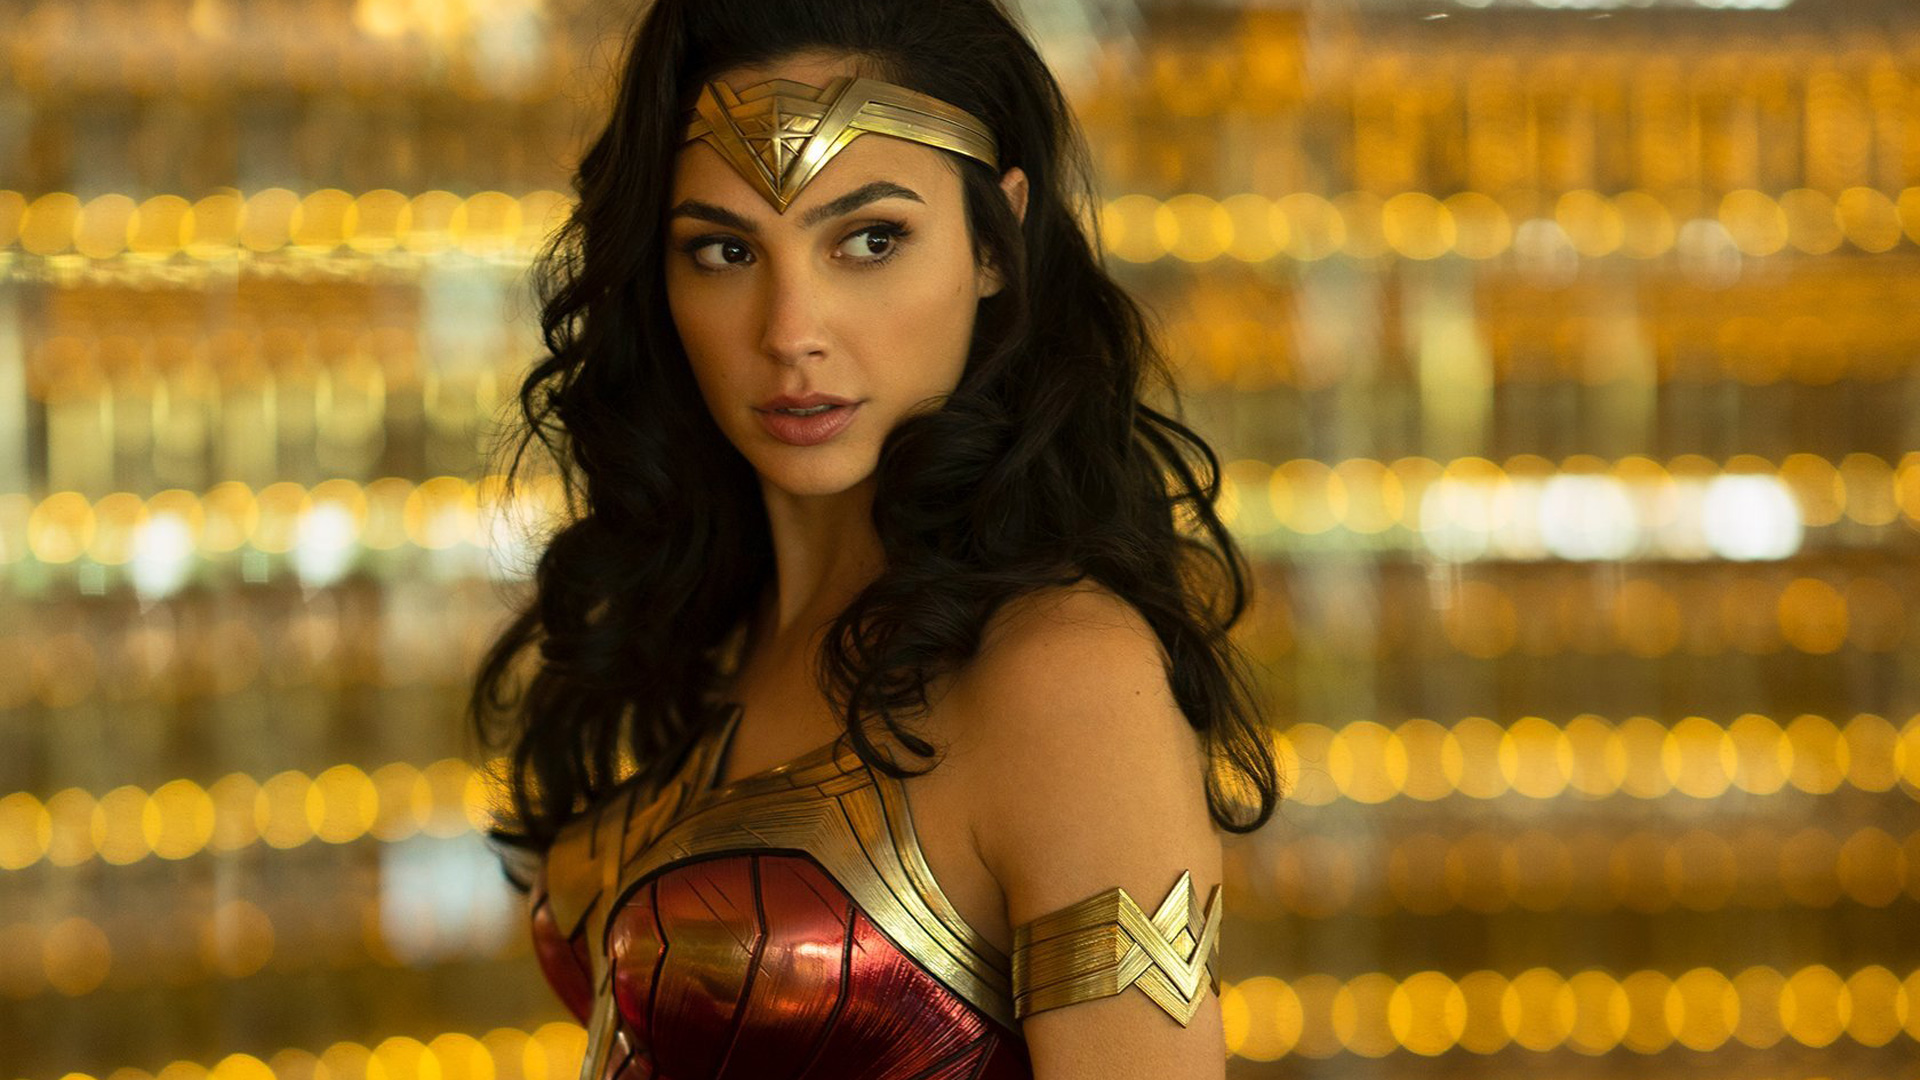 No Gal Gadot Wonder Woman For 'Shazam: Fury of the Gods